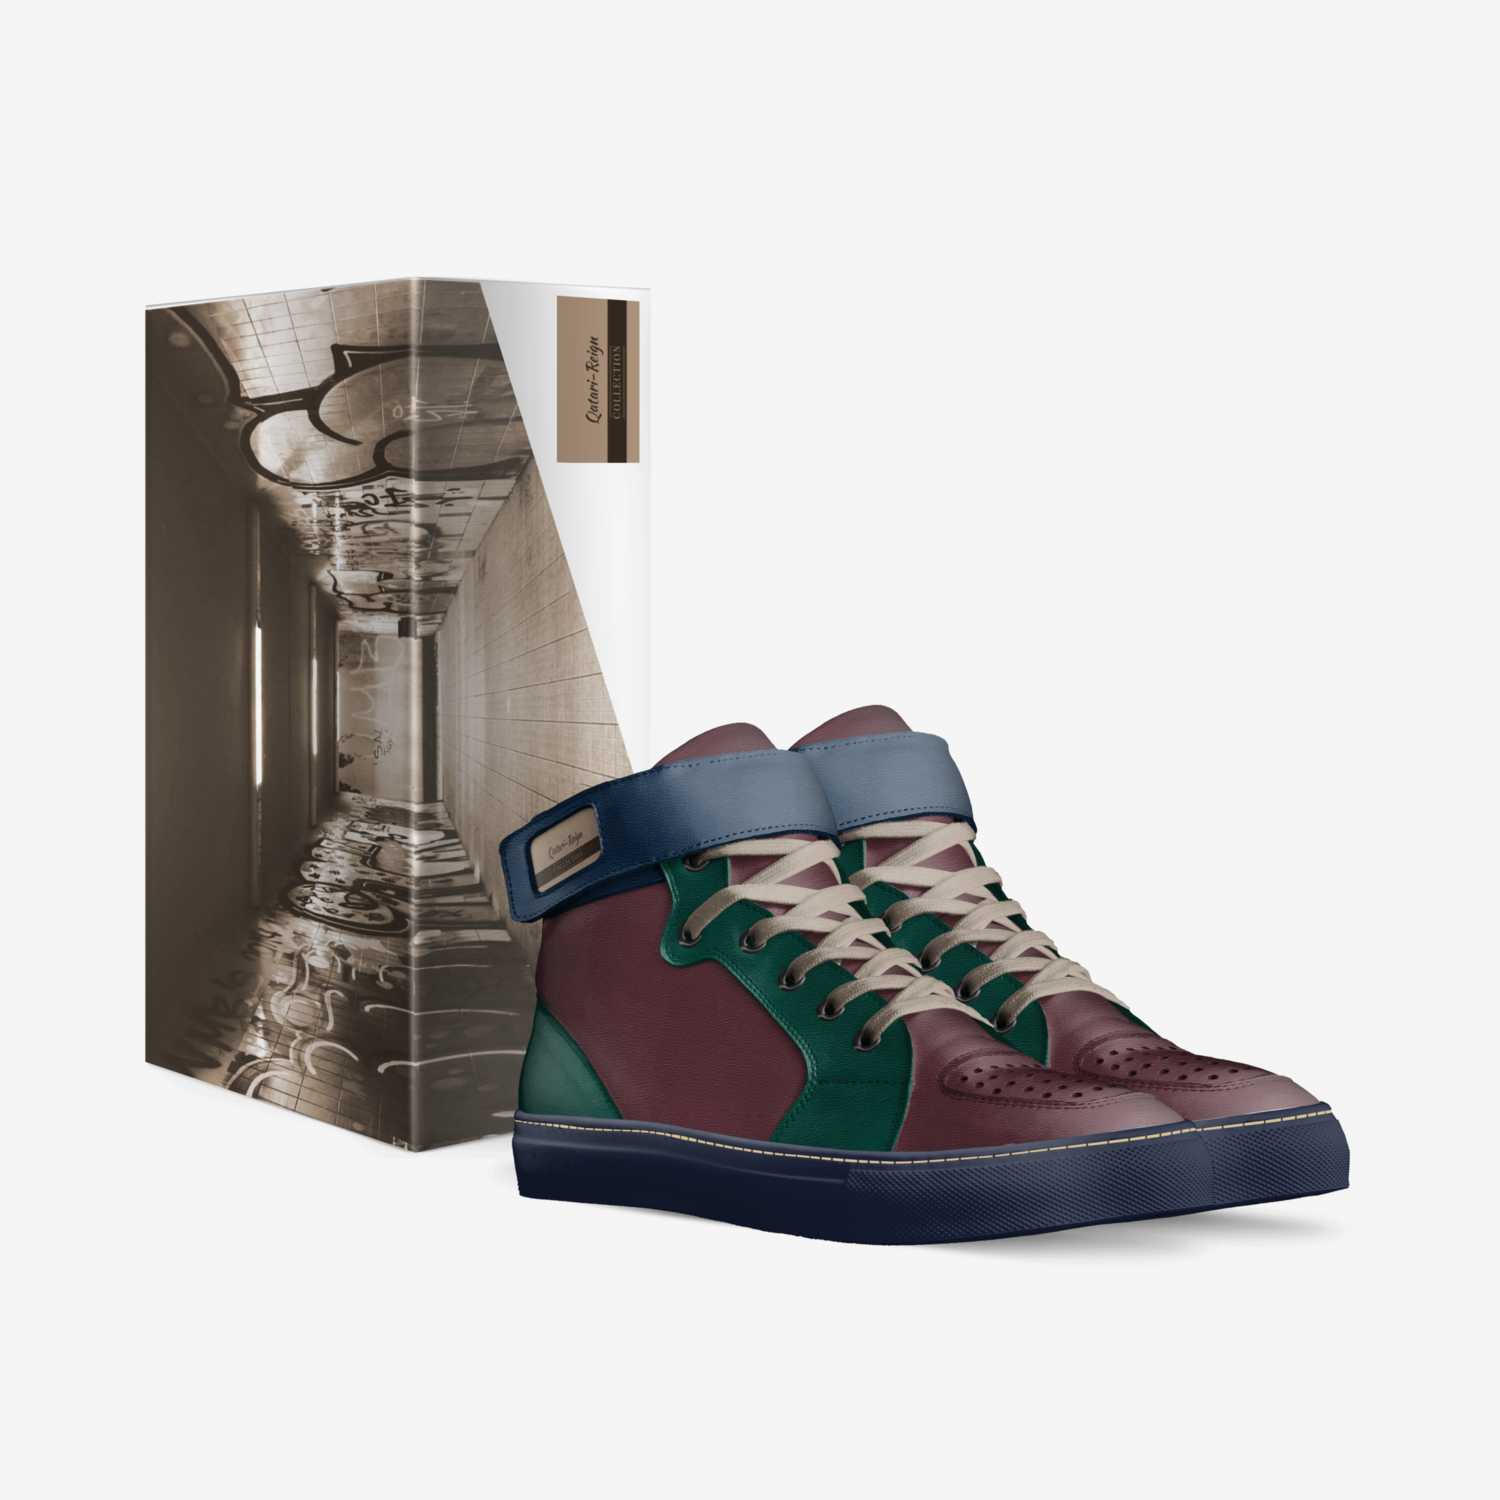 SemiSociety custom made in Italy shoes by Shakiya Gadson | Box view